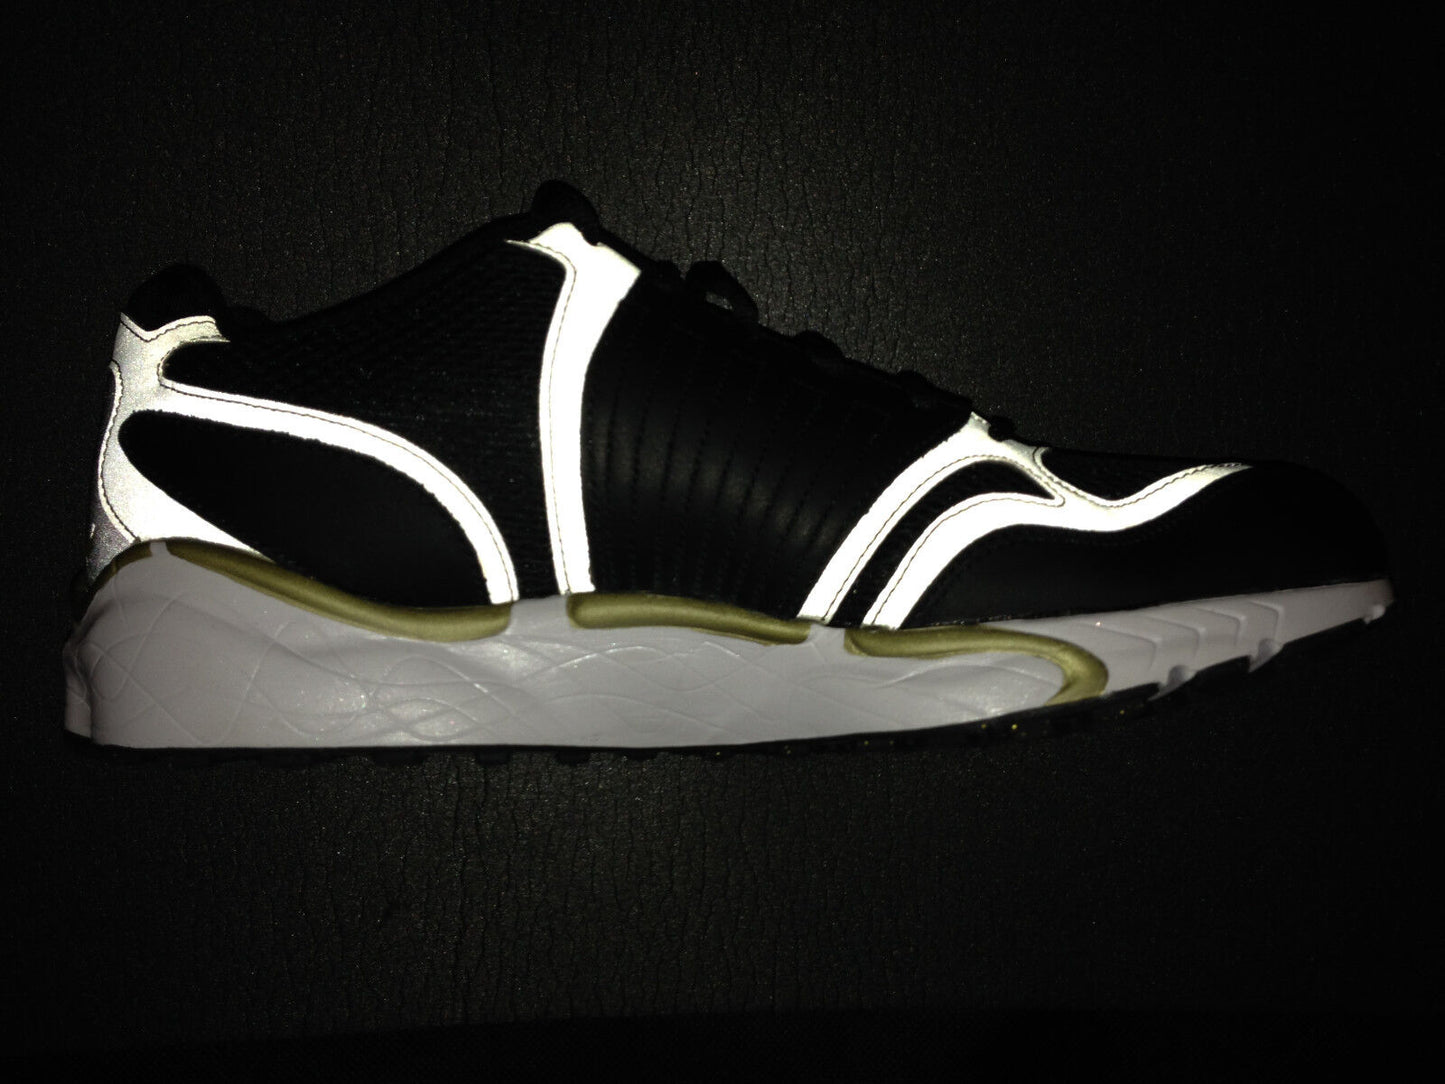 Nike Air Zoom Talaria black/gold new in box Neu in Box US 12 UK 11 EUR 46